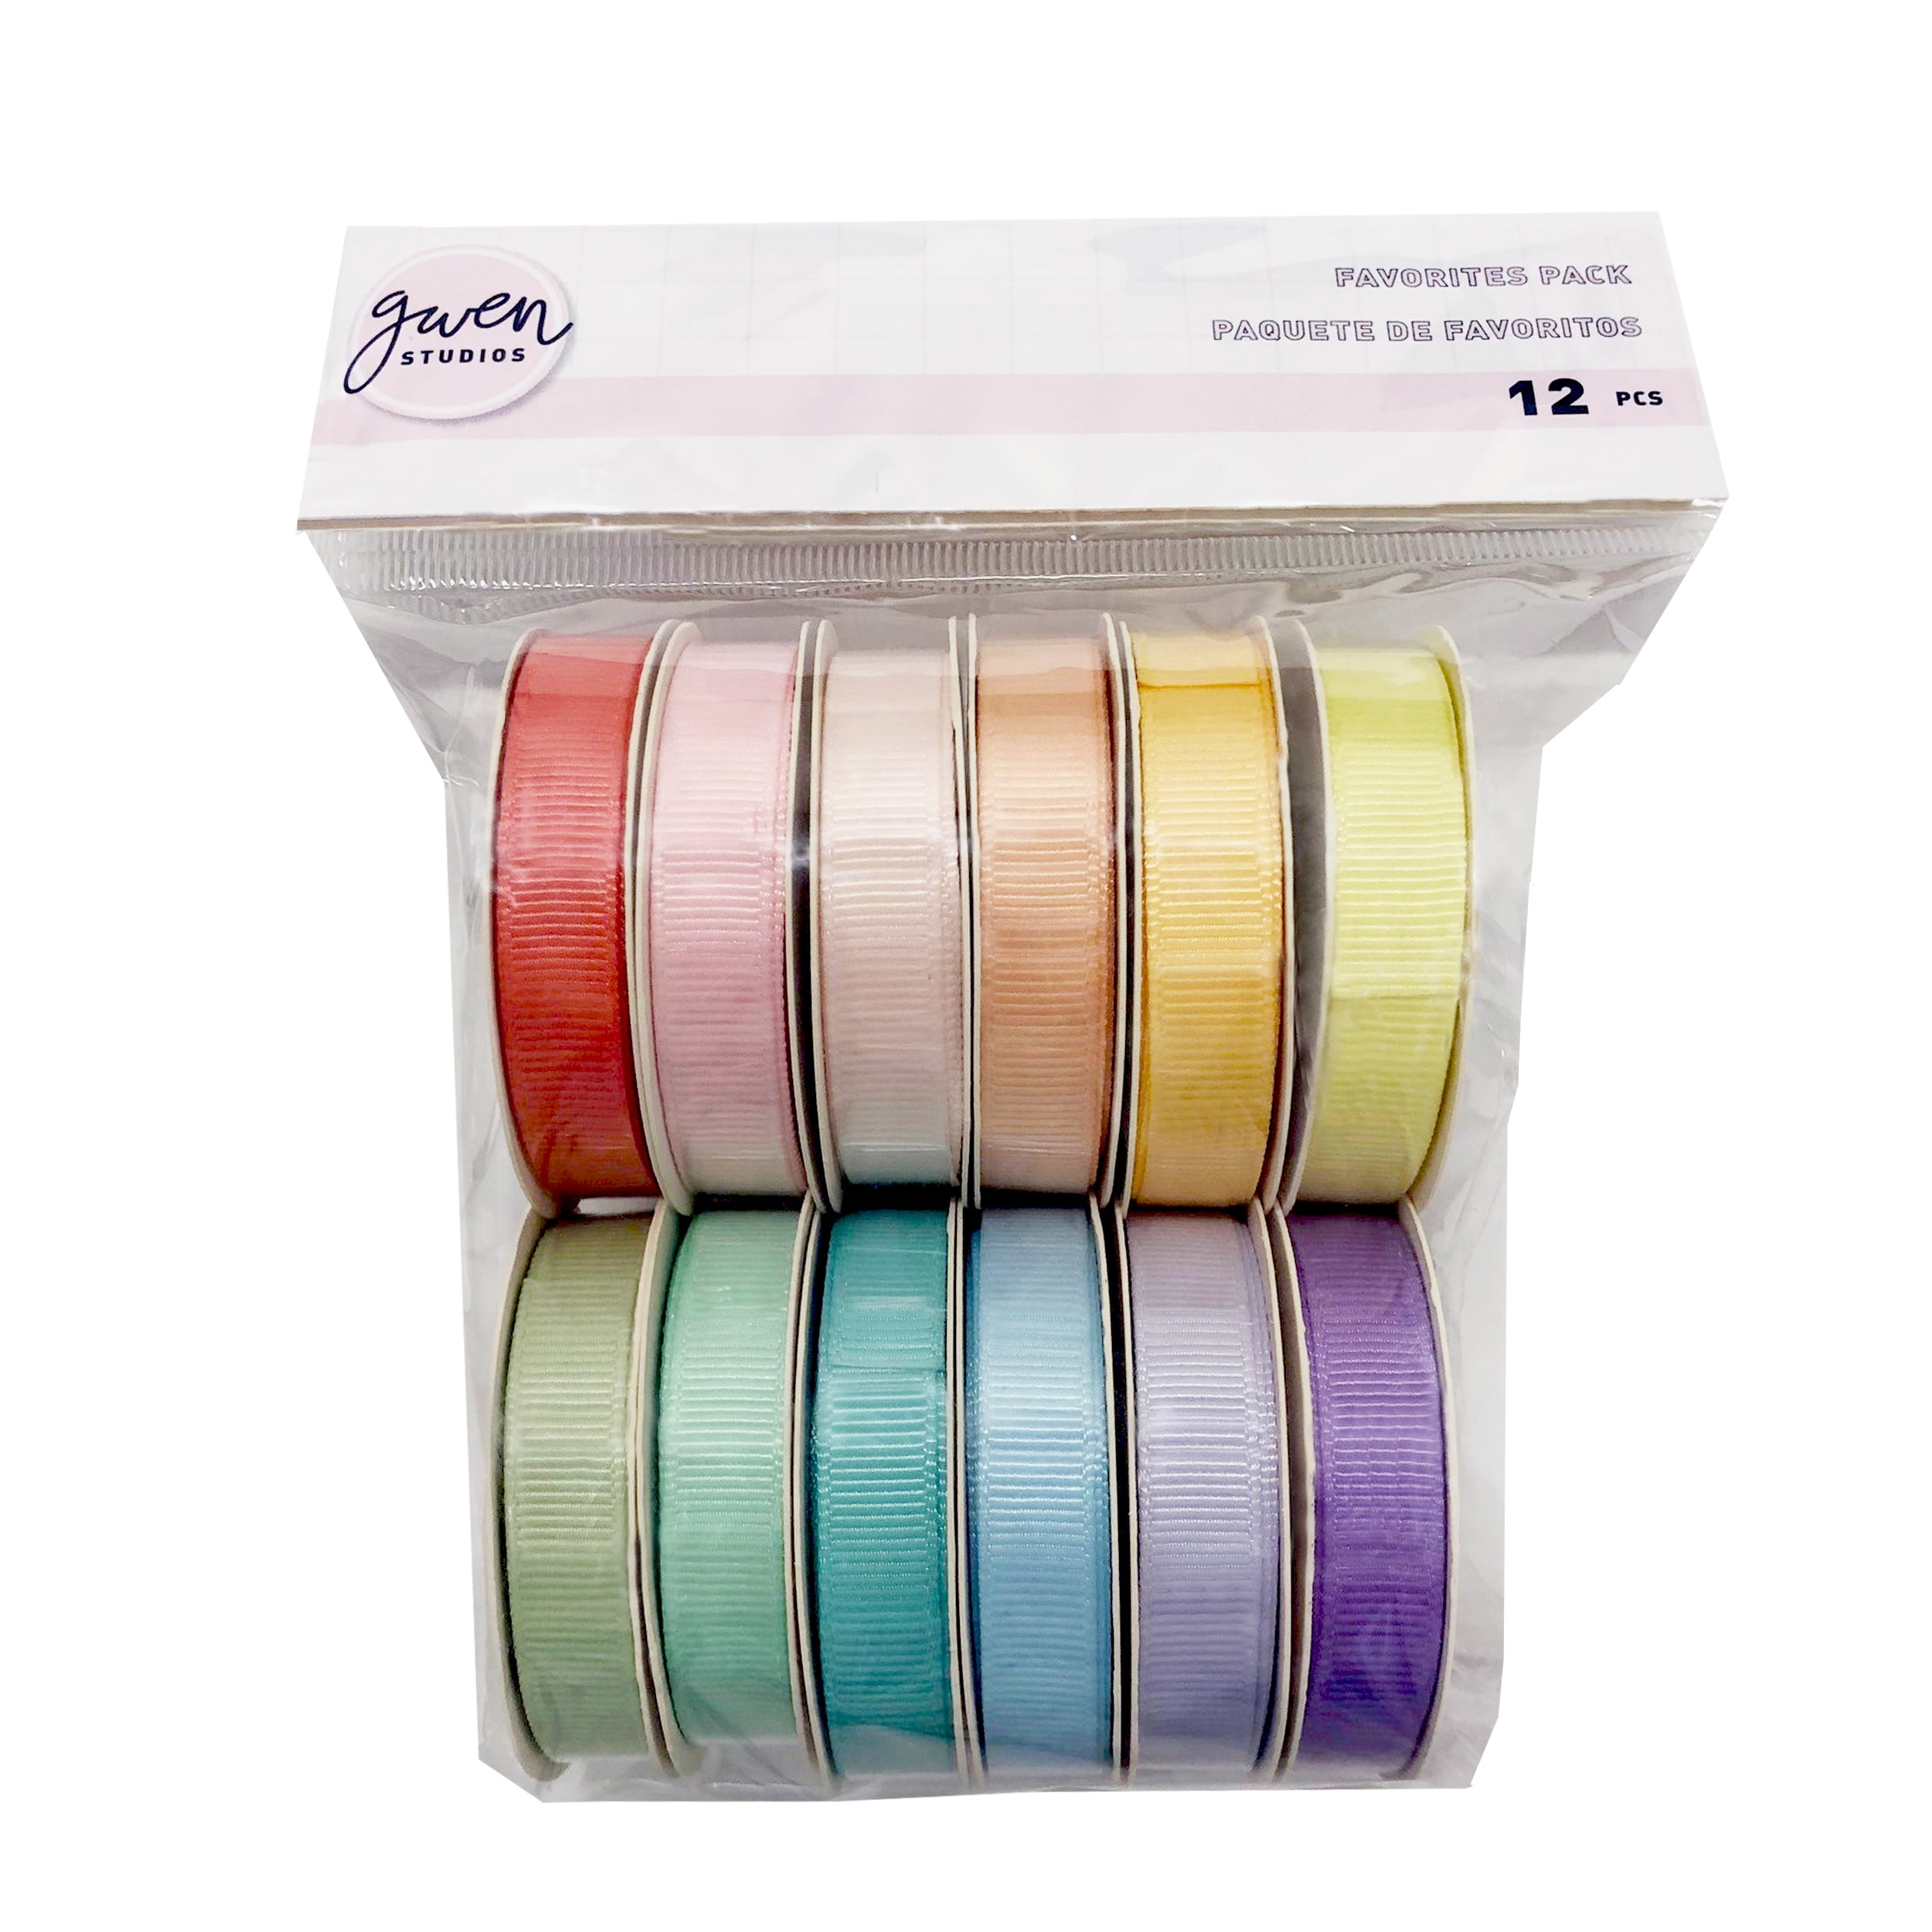 Grosgrain Rainbow Ribbon Pack, 6 Colors, 5/8 inch x 600 Yards by Gwen Studios